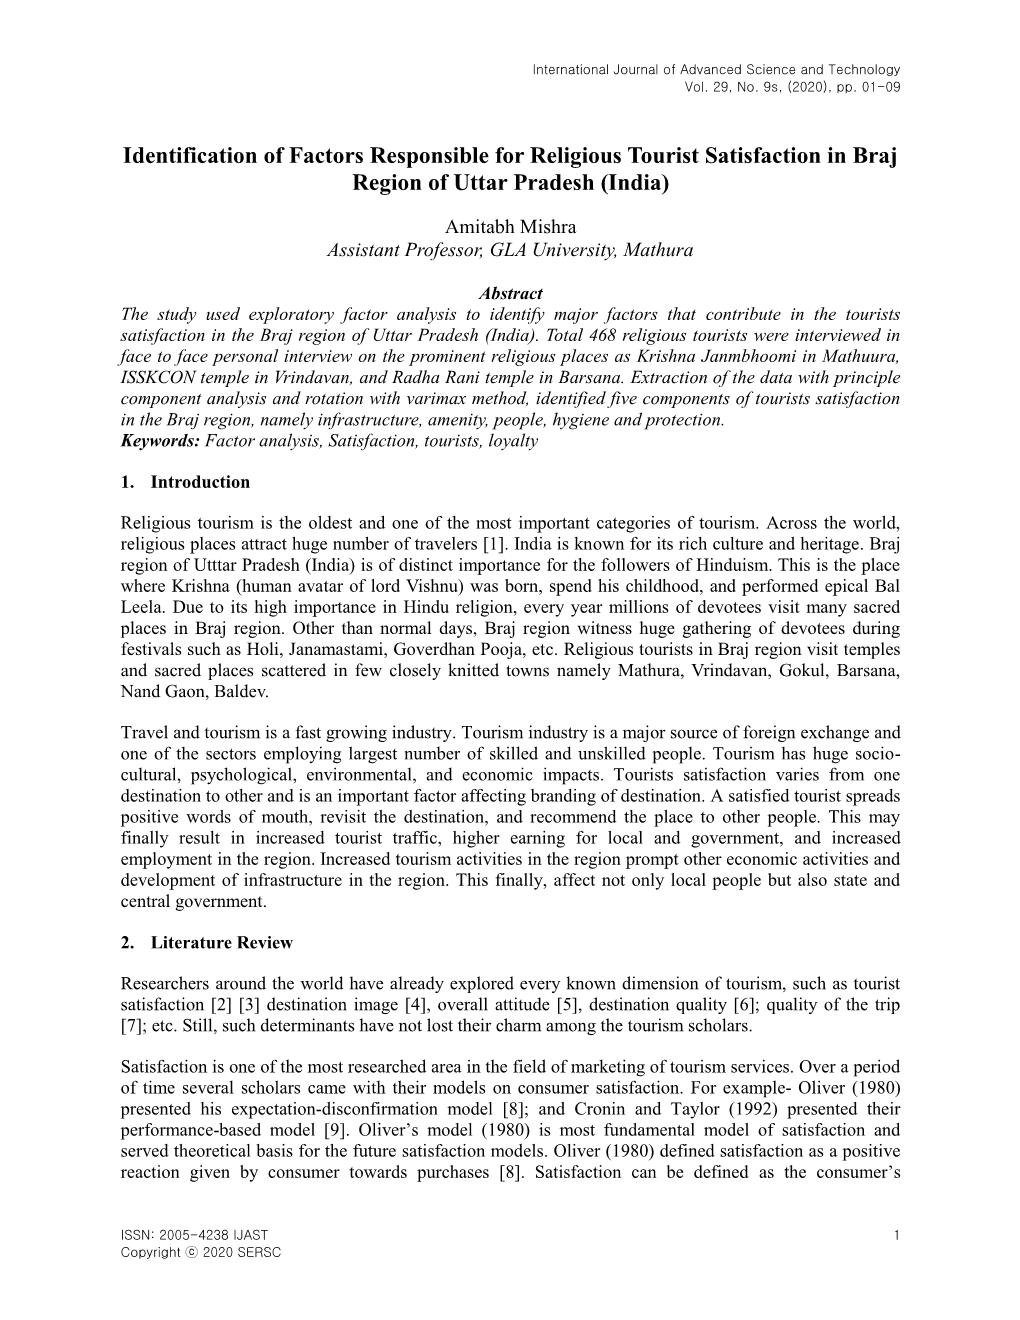 Identification of Factors Responsible for Religious Tourist Satisfaction in Braj Region of Uttar Pradesh (India)